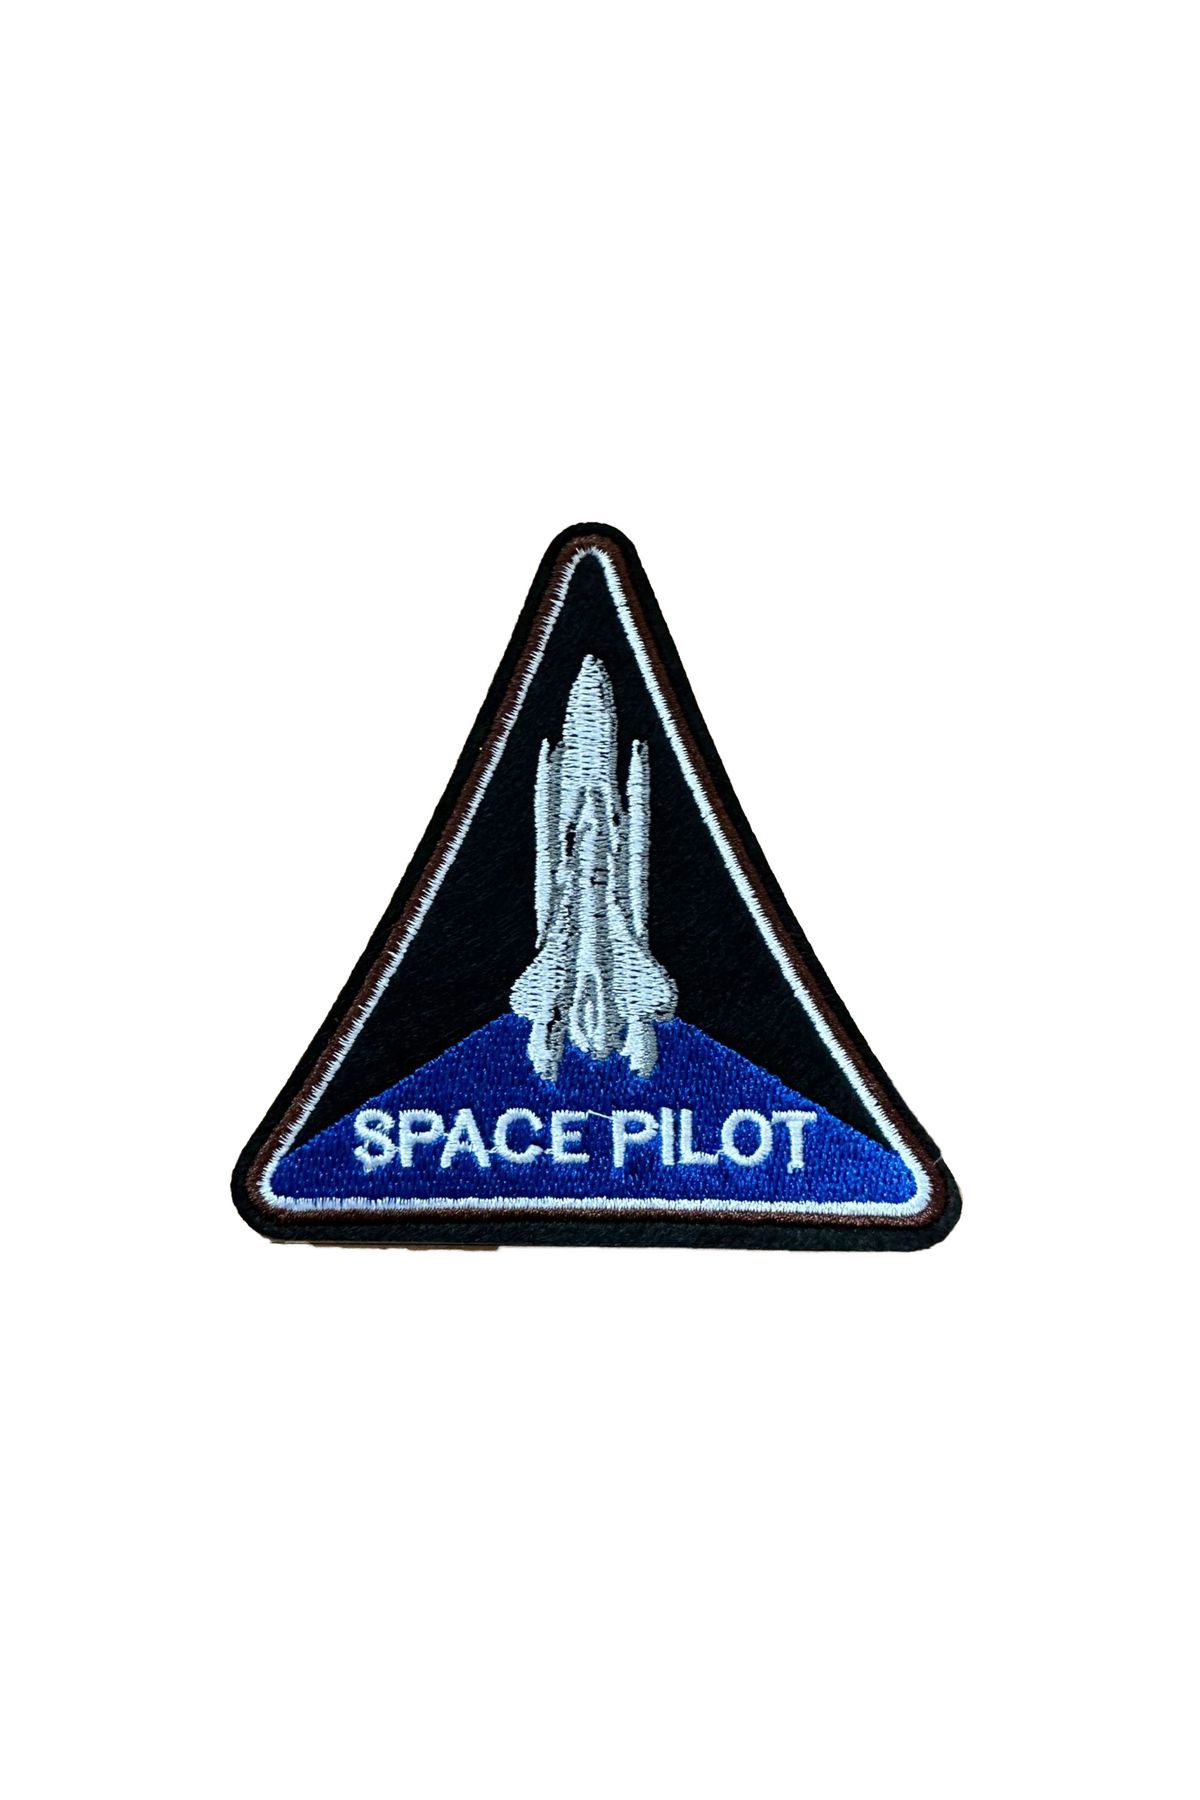 X-SHOP Space Pilot Badge Patches Arma Peç Kot Yaması